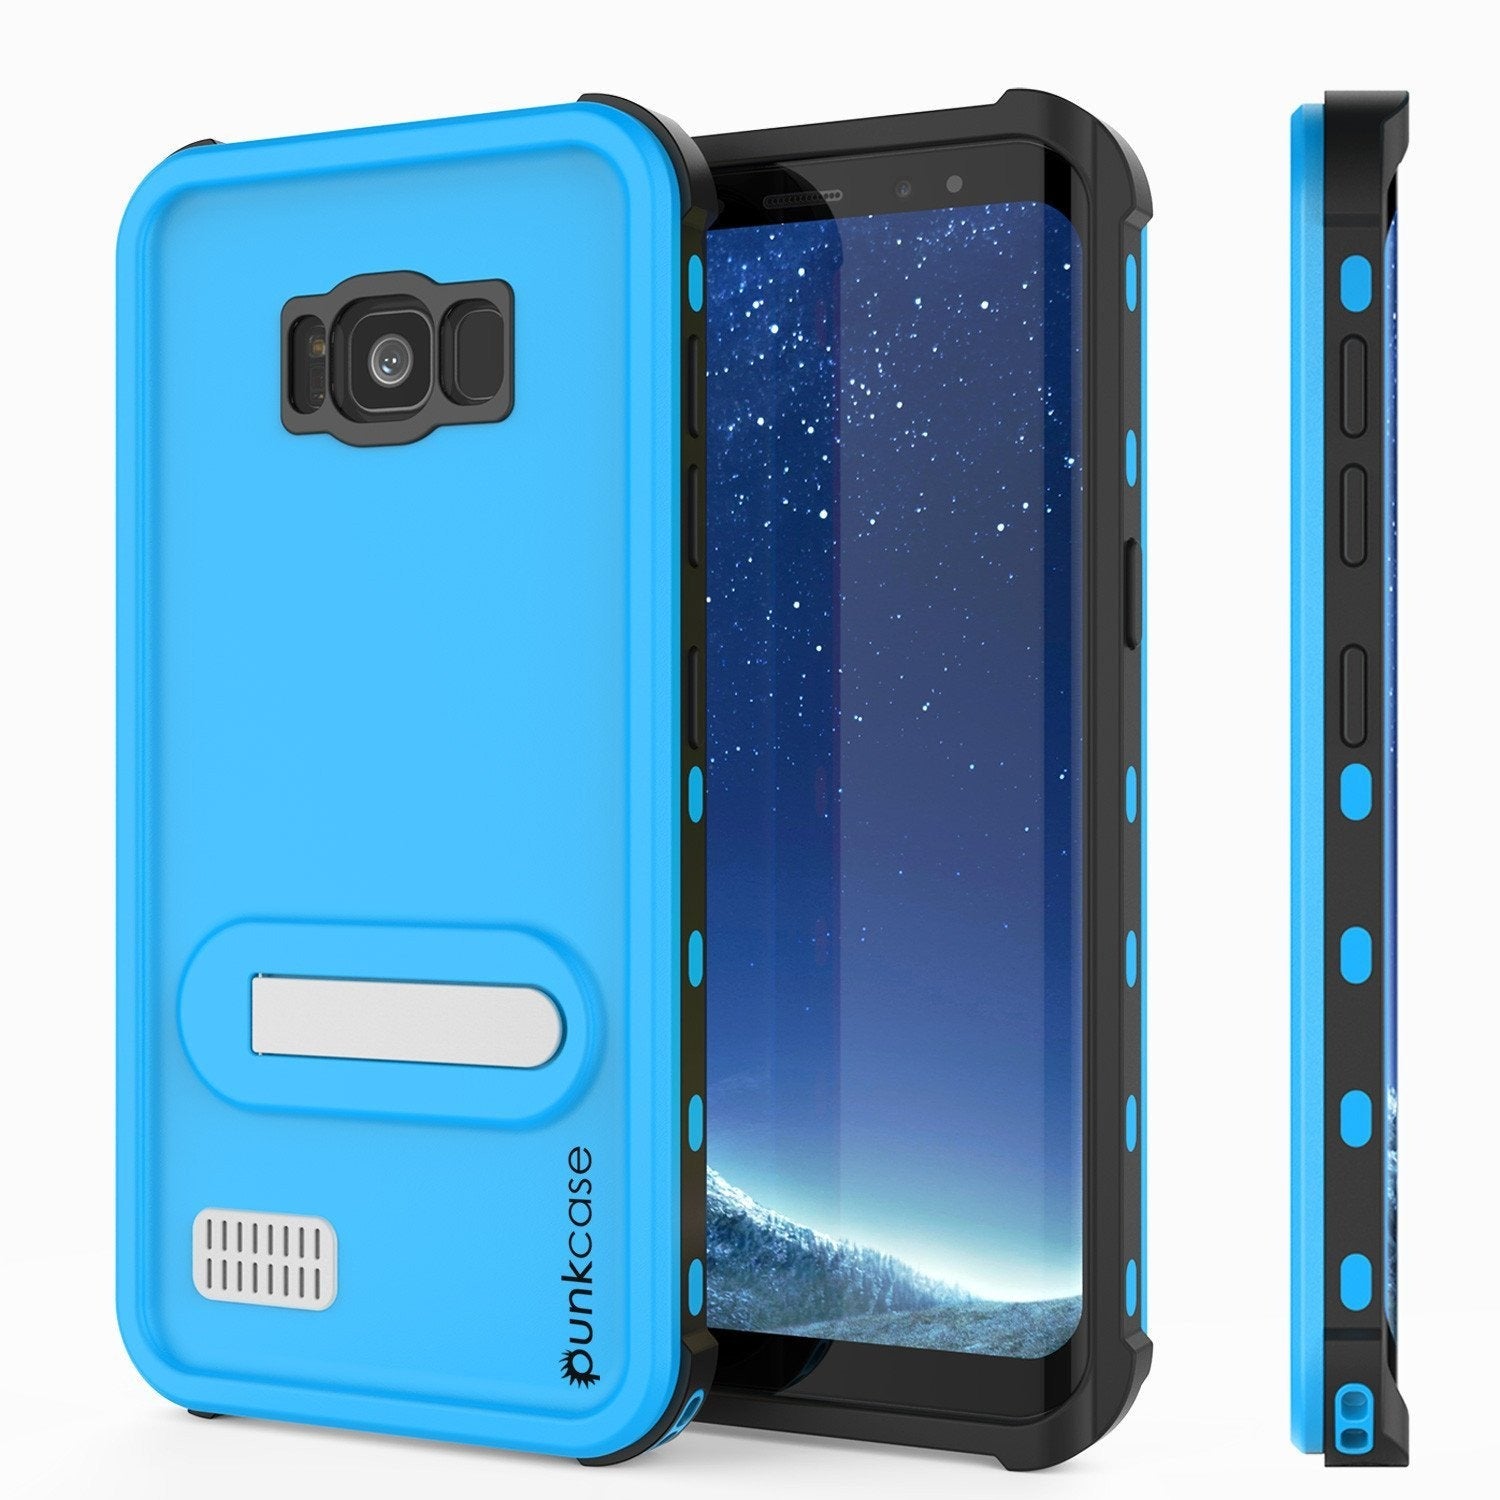 Protector [PURPLE]Galaxy S8 Waterproof Case, Punkcase [KickStud Series] [Slim Fit] [IP68 Certified] [Shockproof] [Snowproof] Armor Cover [Light Blue] (Color in image: Light Blue)